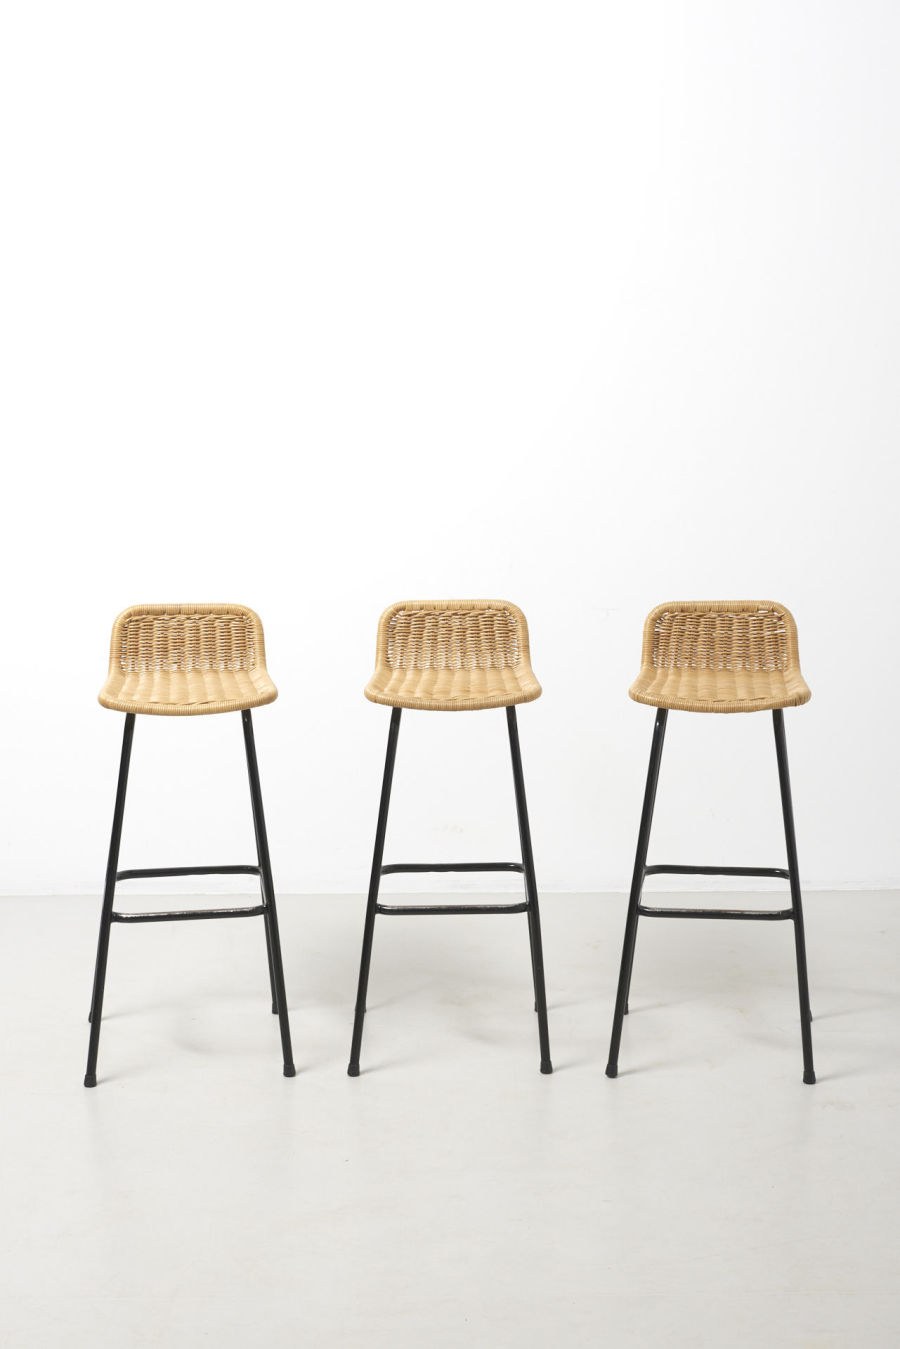 modestfurniture-vintage-2355-rattan-bar-stool01